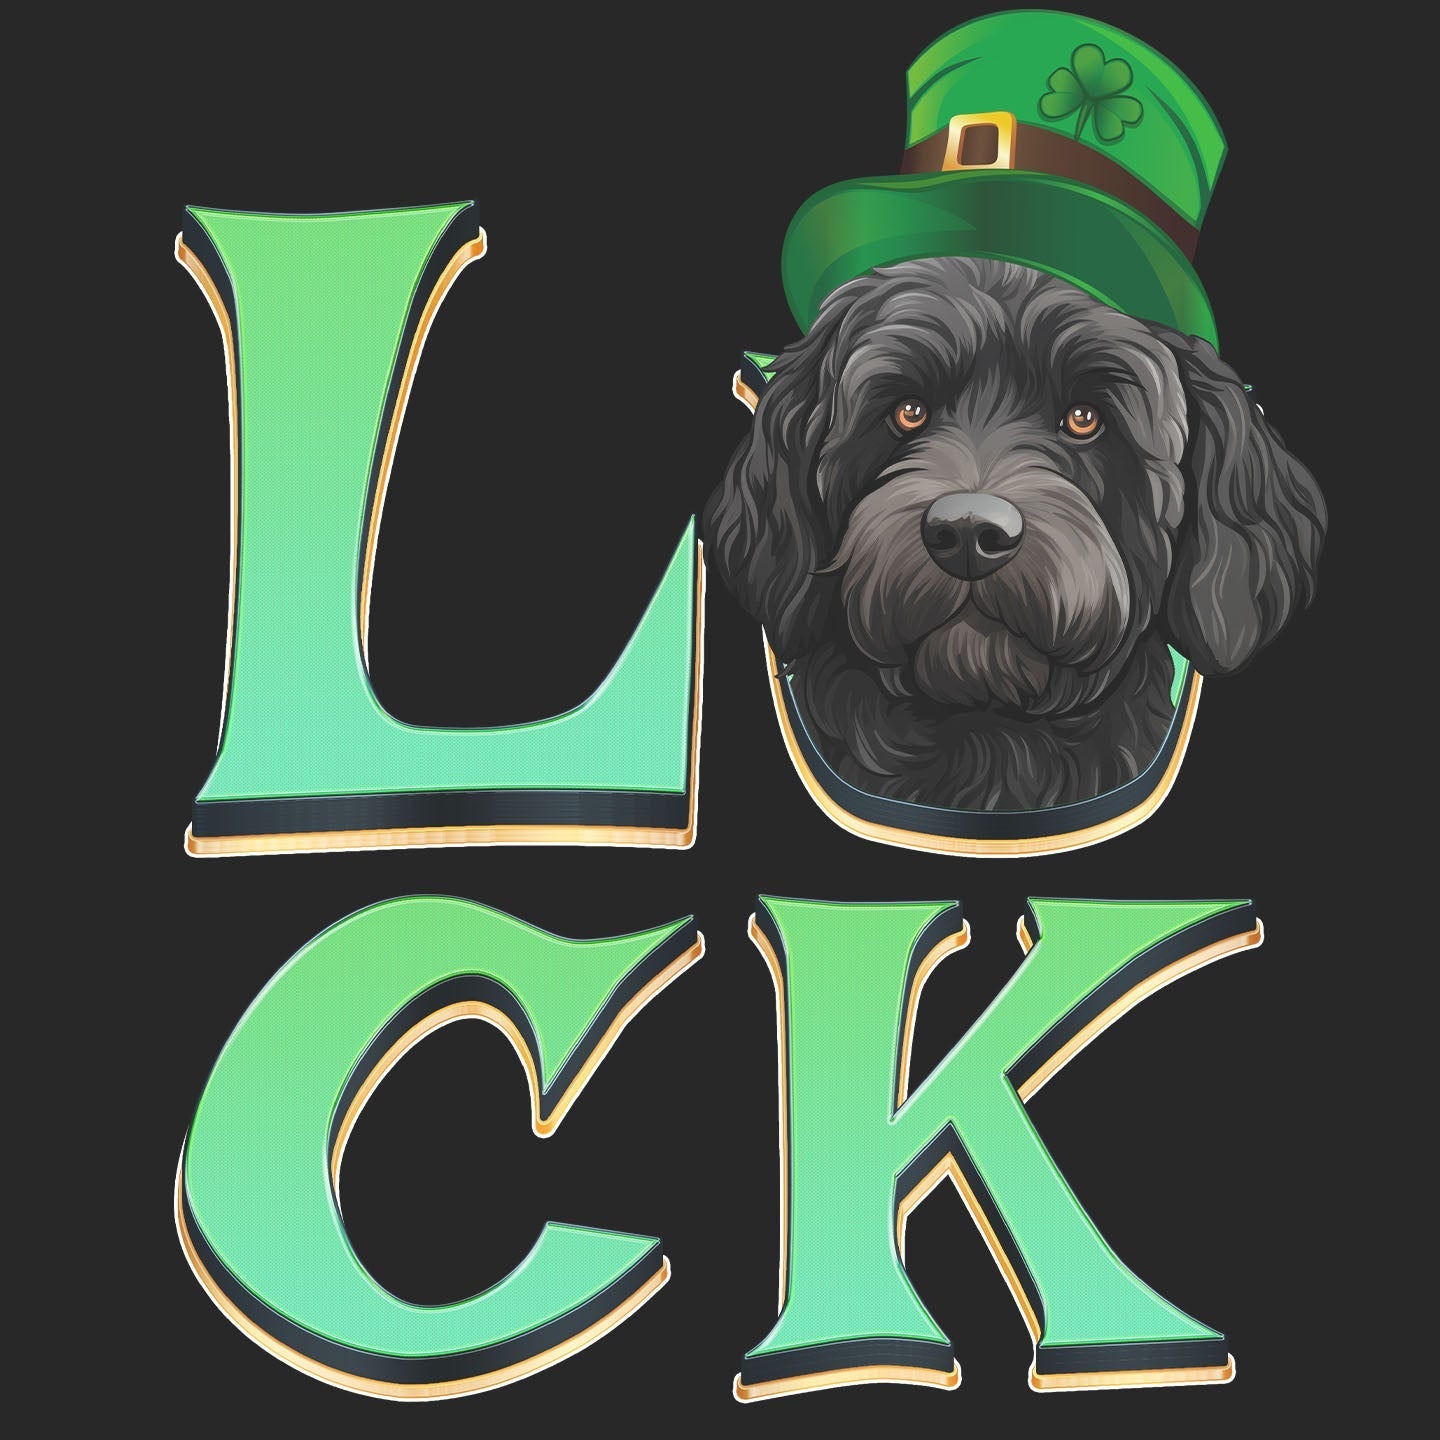 Big LUCK St. Patrick's Day Labradoodle (Black) - Adult Unisex Crewneck Sweatshirt